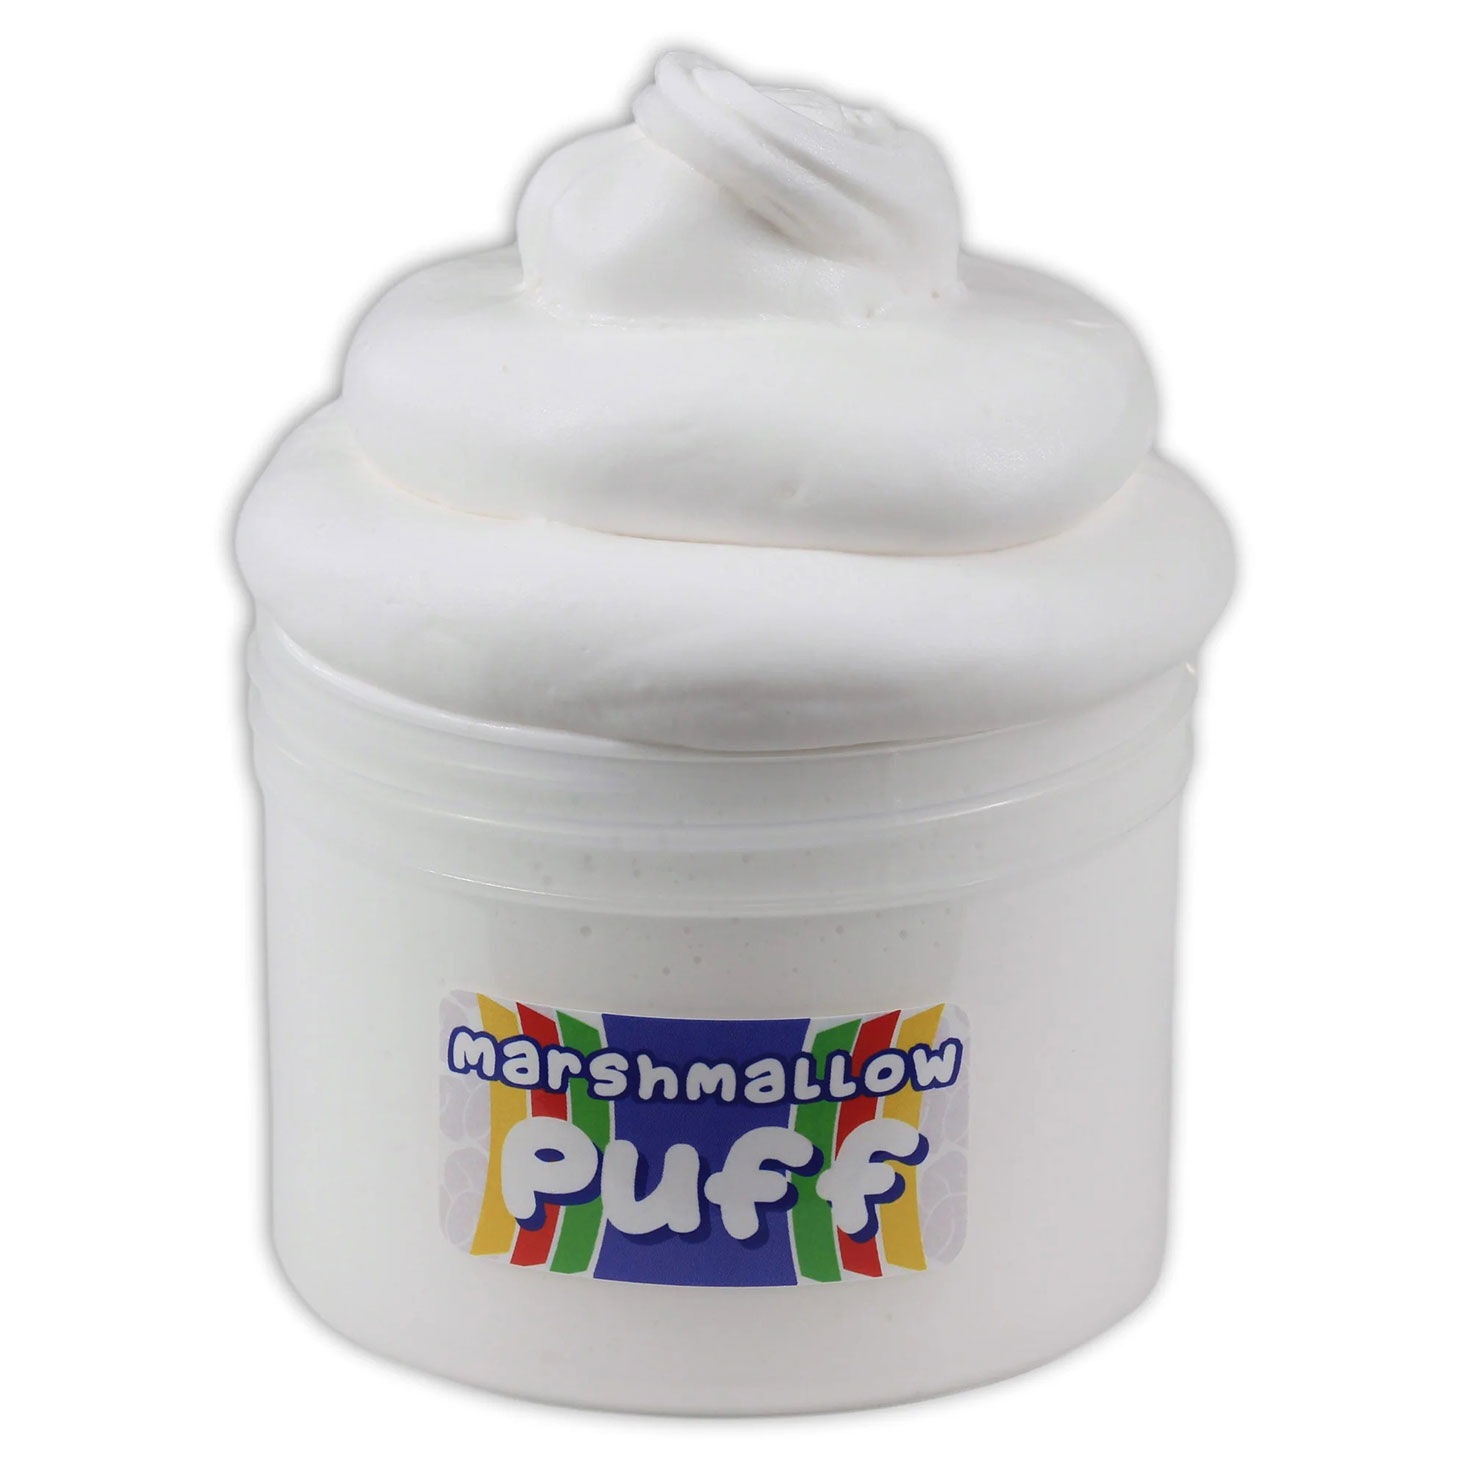 Dope Slimes Marshmallow Puff Butter Slime - Developmental Toys